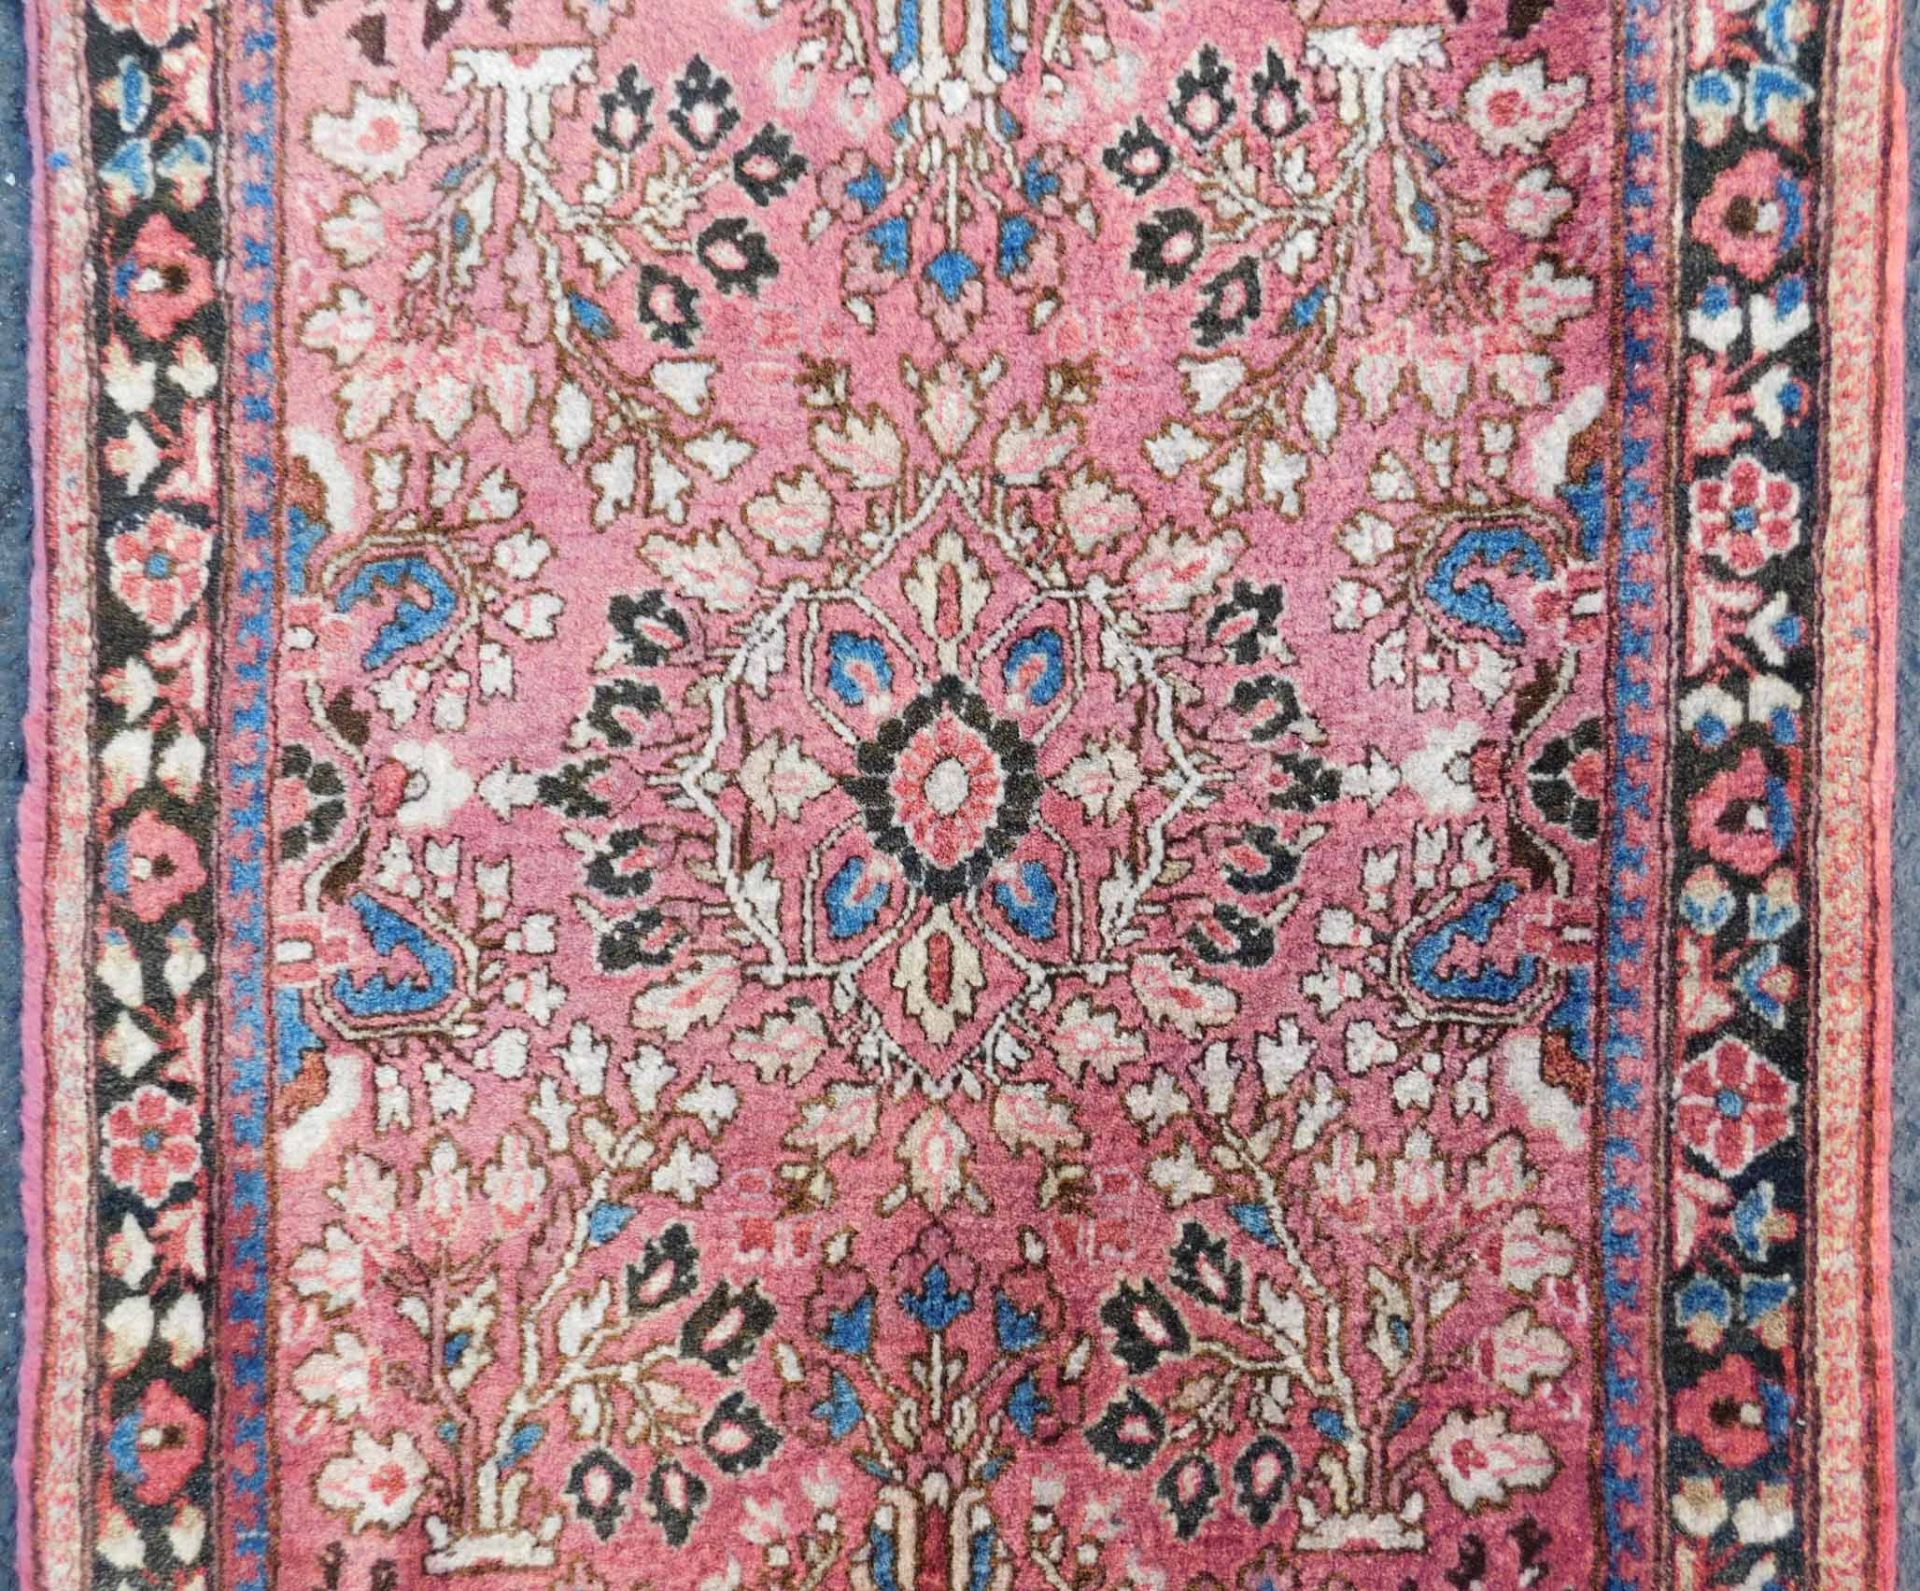 2 Saruk "American Saruk". Persian carpets. Iran, about 80 - 110 years old. - Image 7 of 12